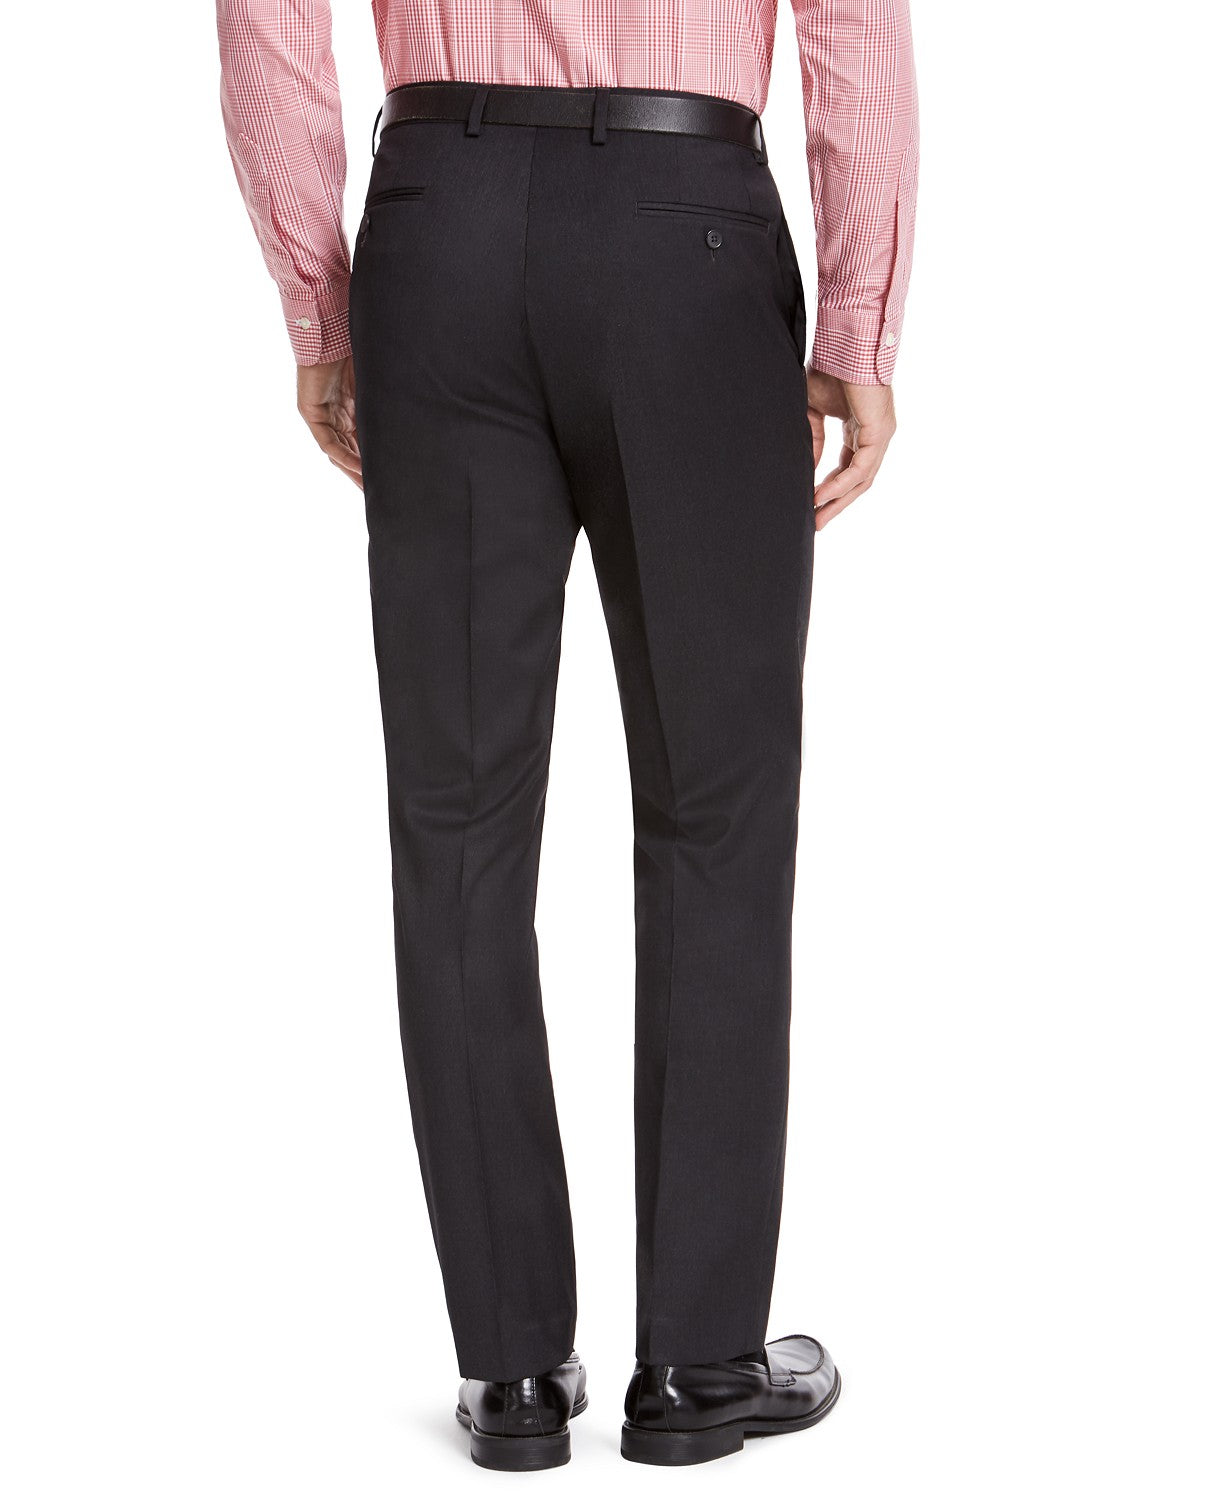 Izod Men's Dress Pants 38 X 30 Classic-Fit Charcoal Flat Front